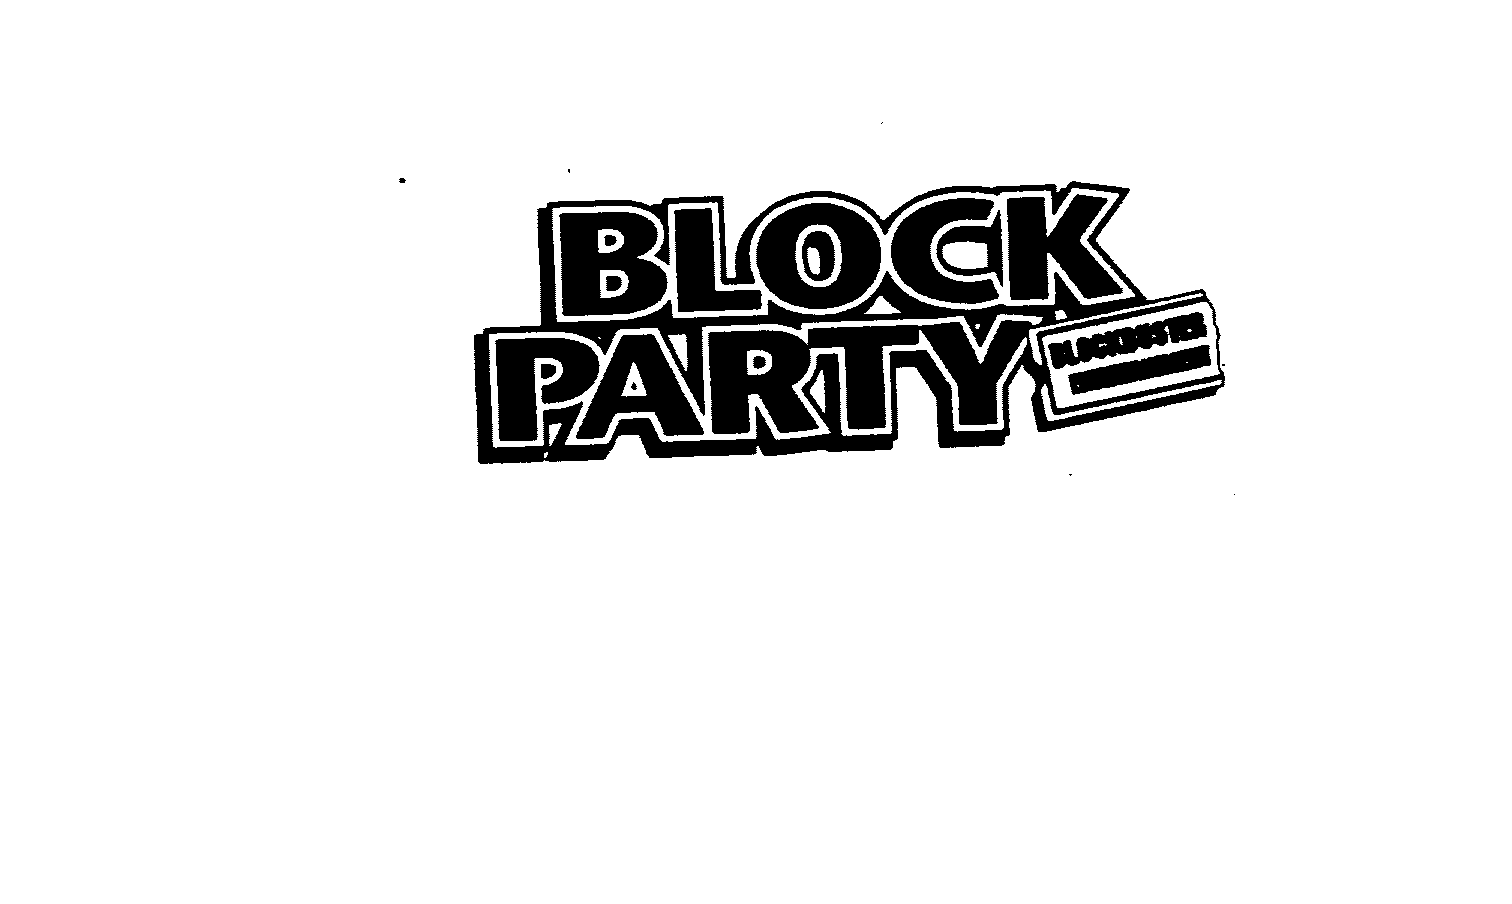  BLOCK PARTY BLOCKBUSTER ENTERTAINMENT